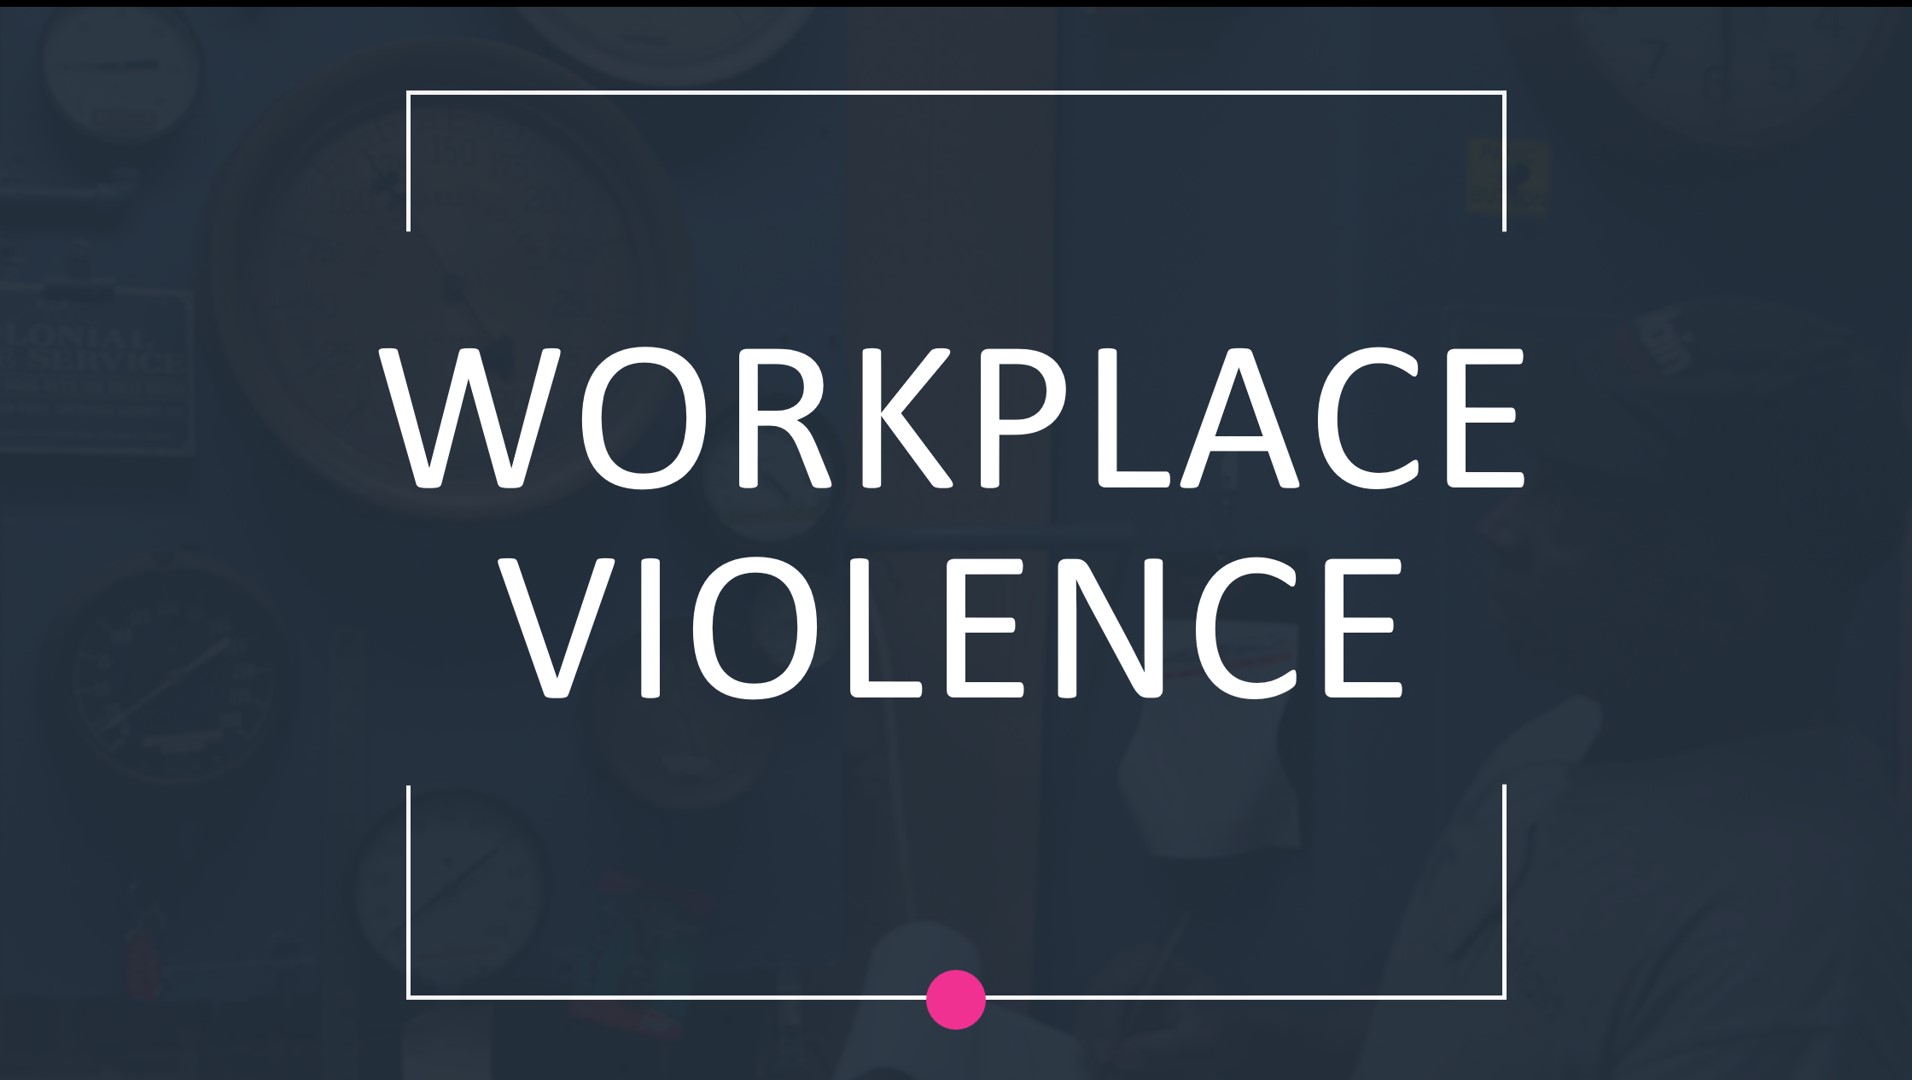 Header image reading: "Workplace Violence"